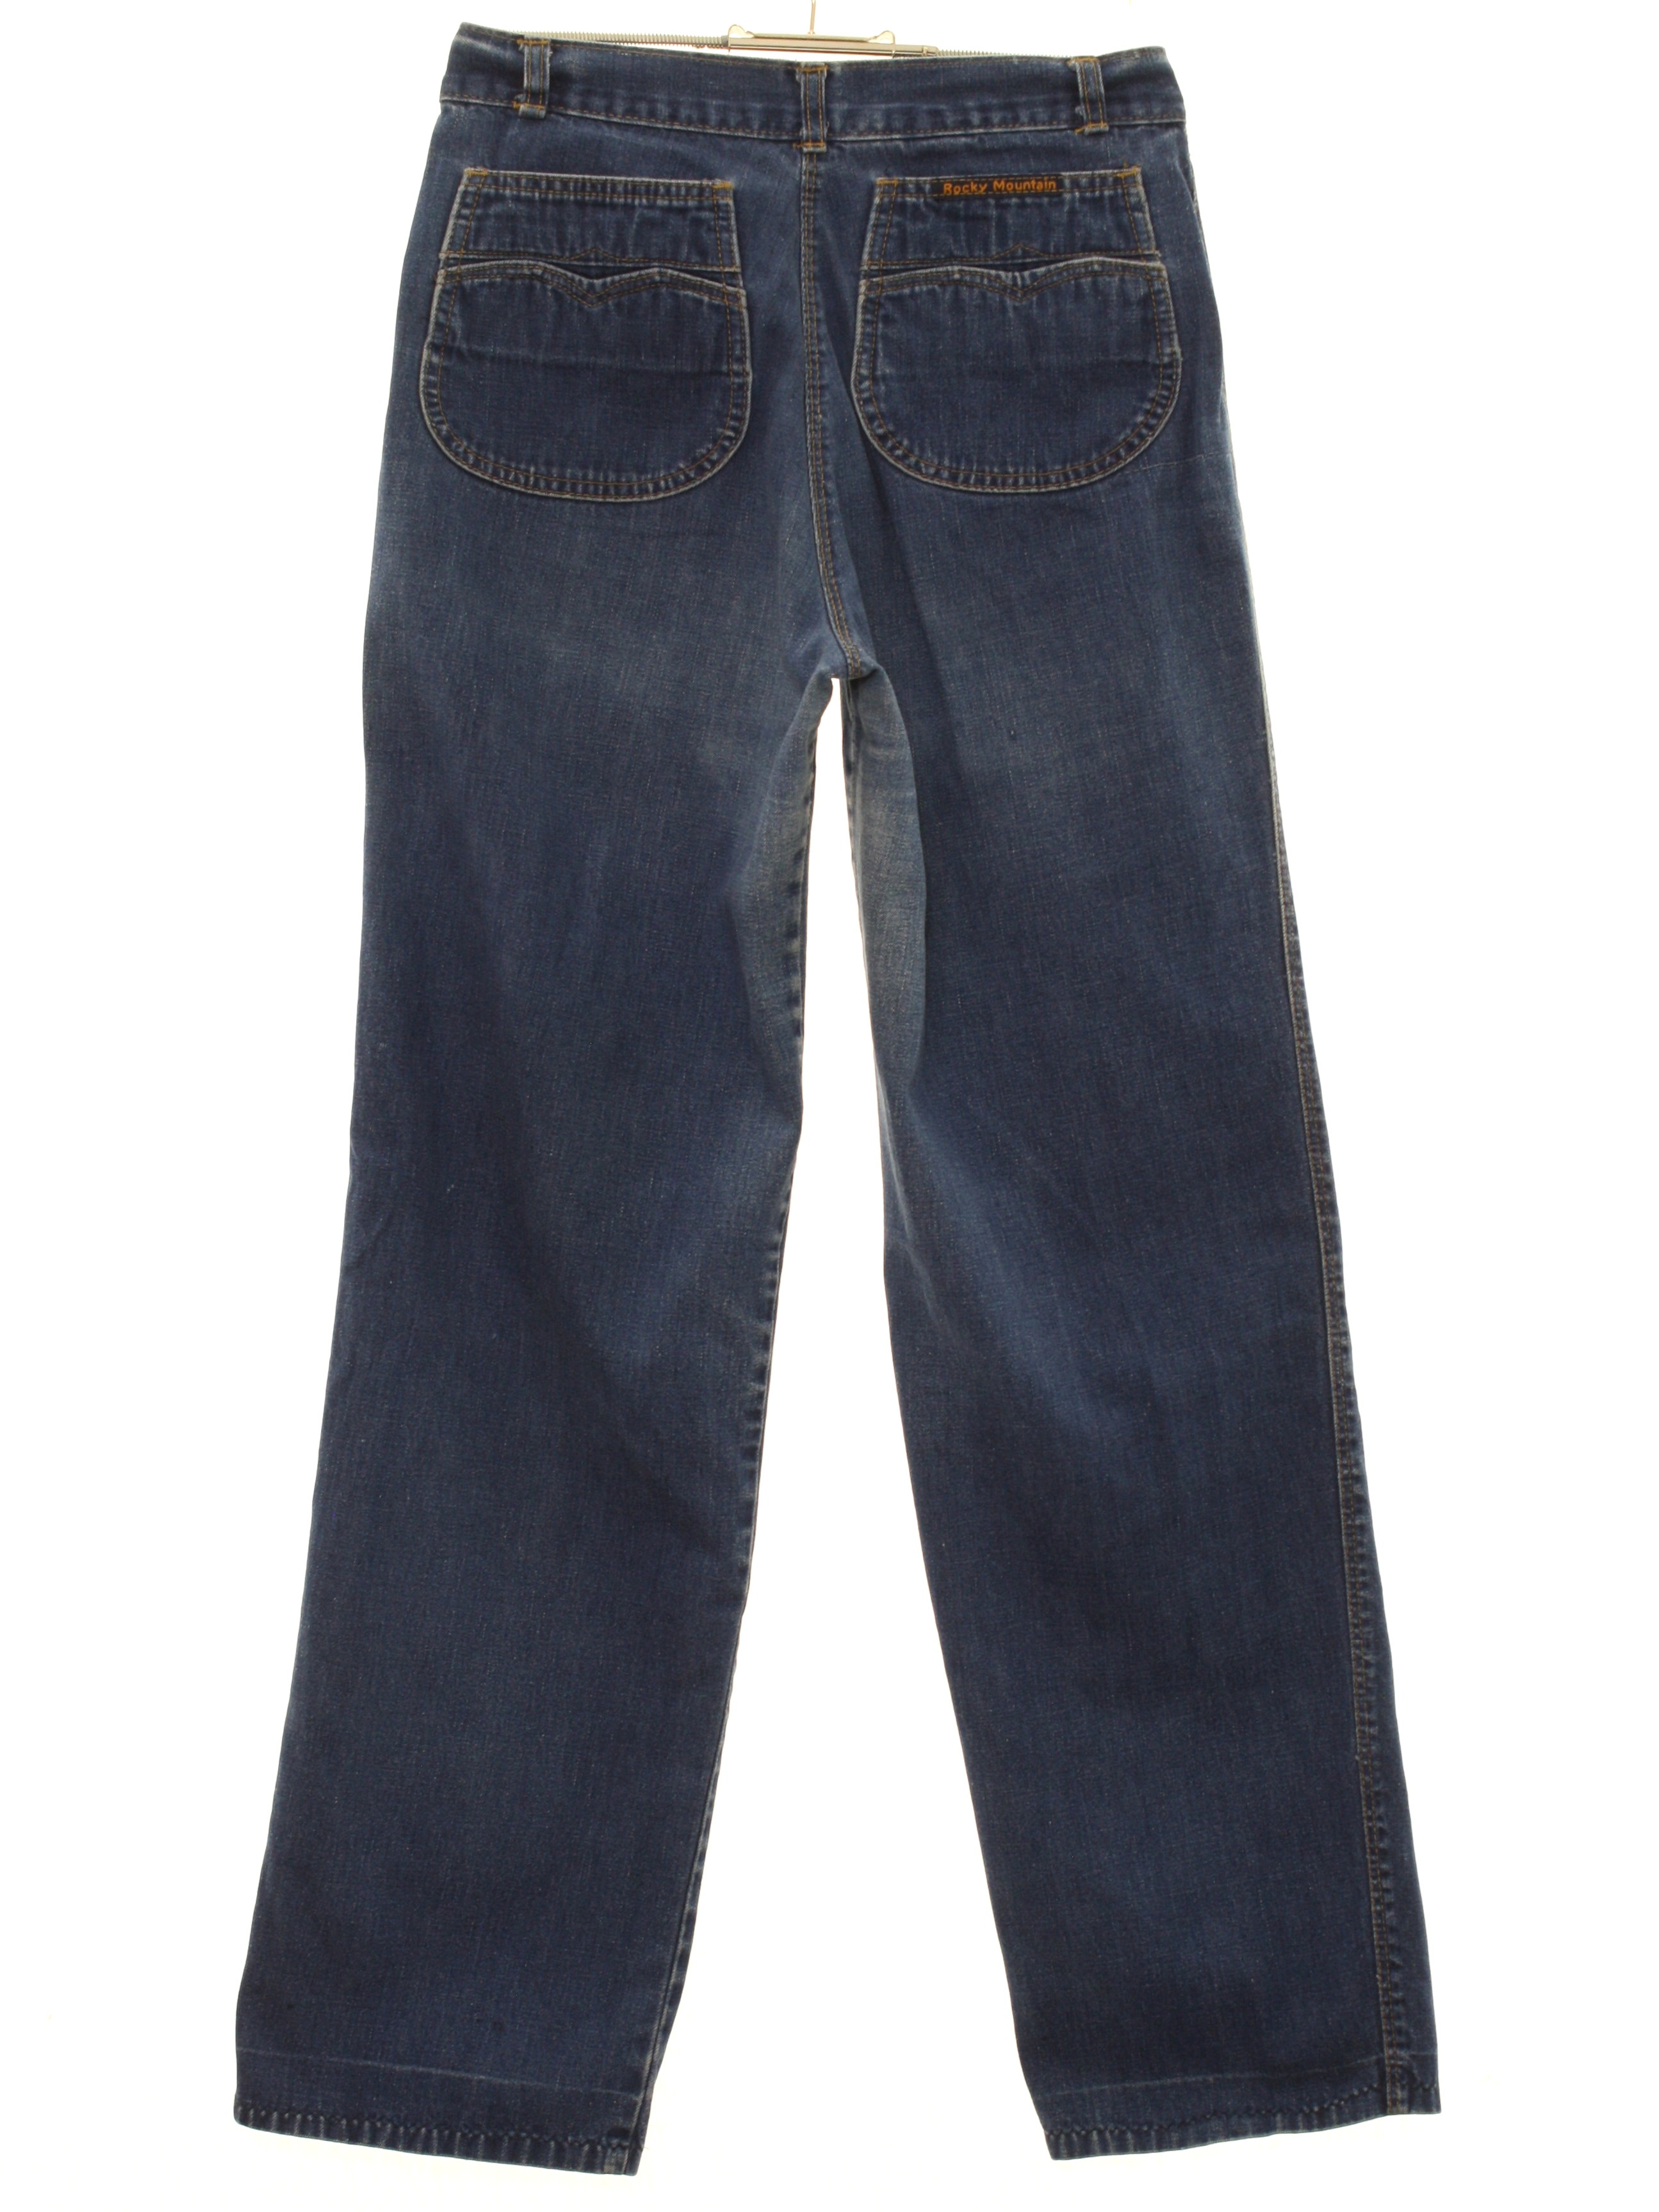 Buy > rocky mountain jeans 80s > in stock